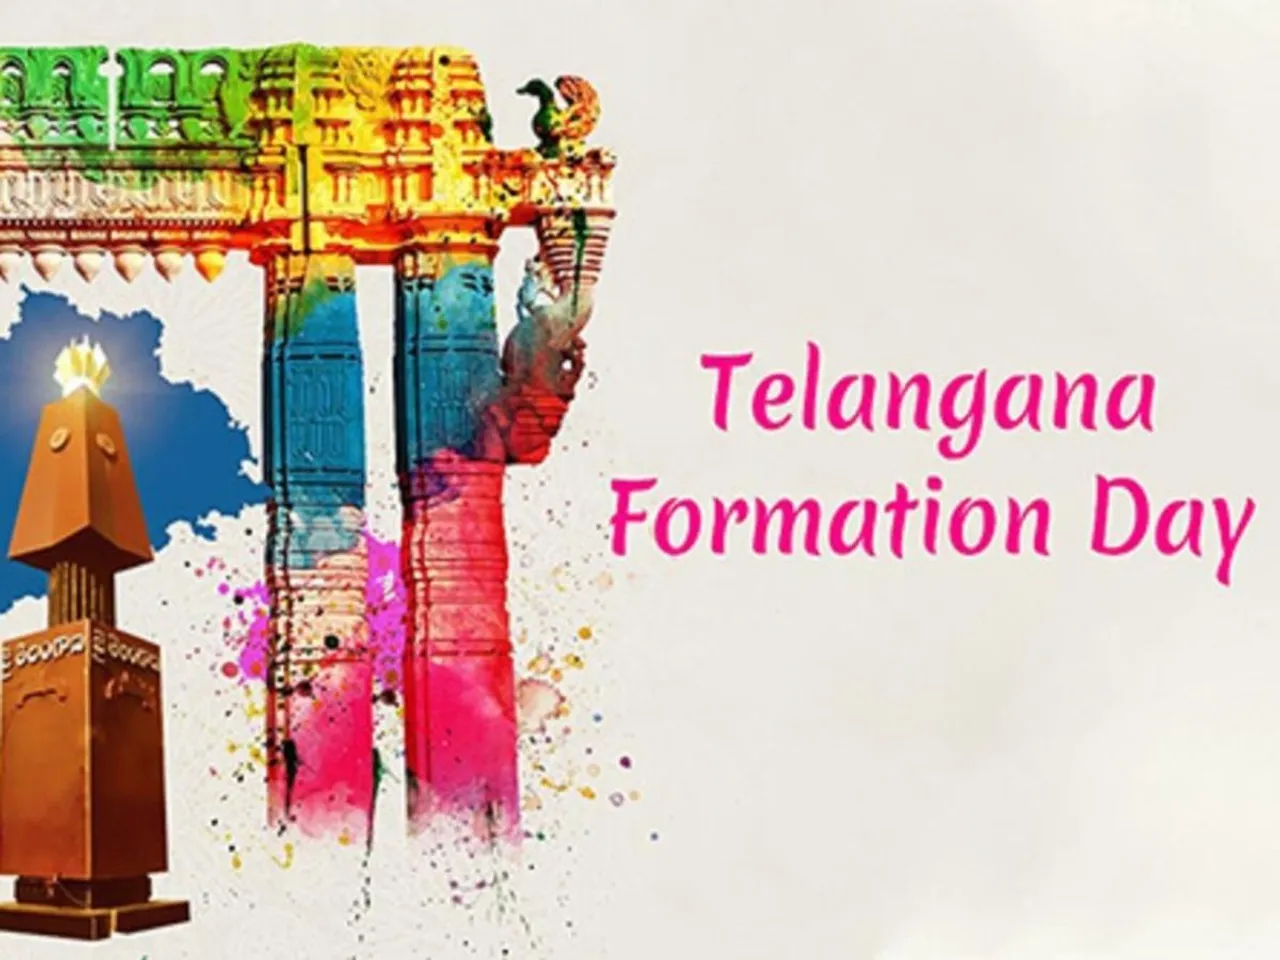 Formation Day of Telangana.jpg